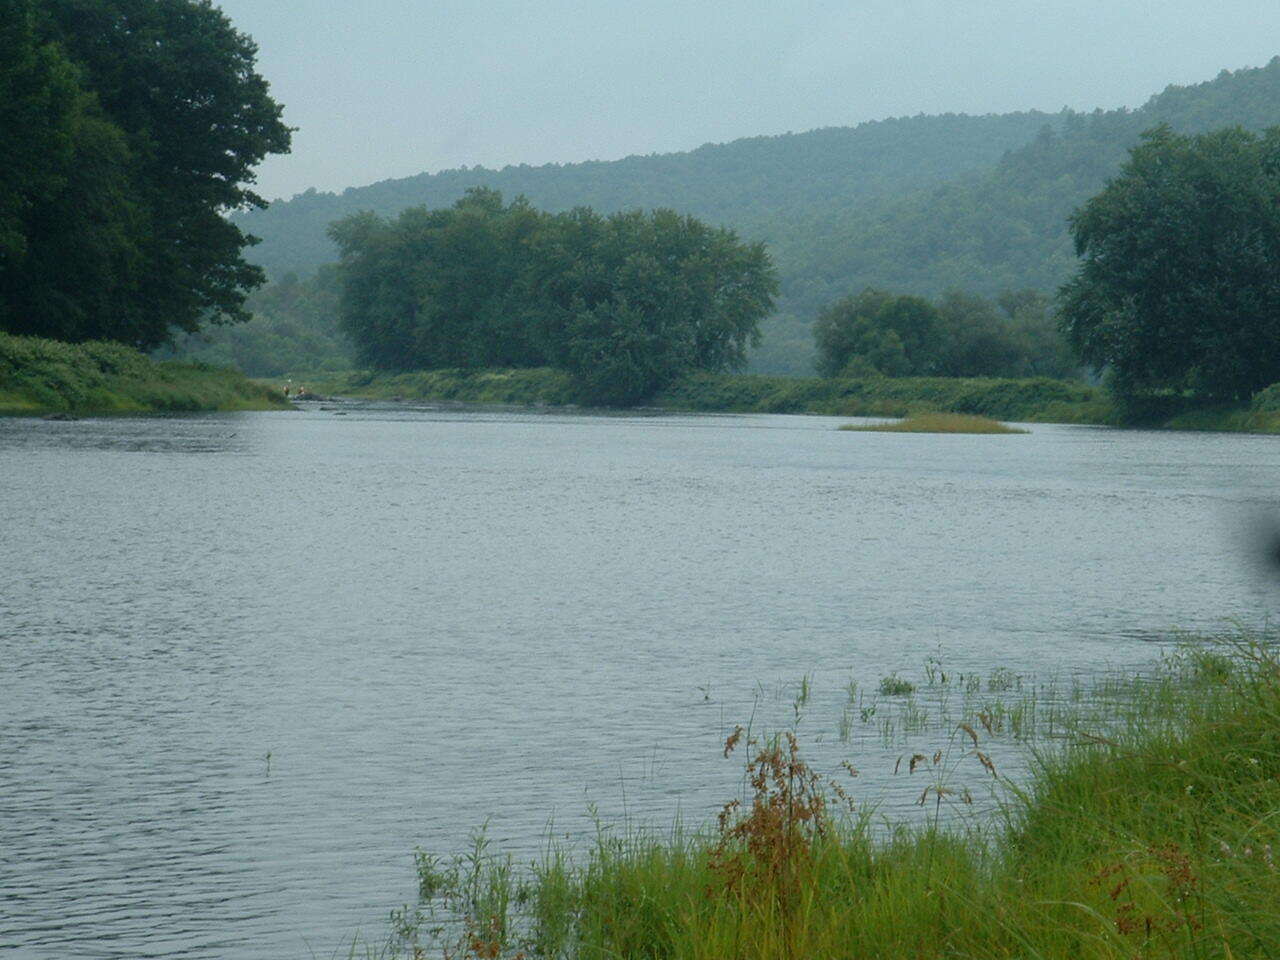 Delaware River near Callicoon, NY - median flow